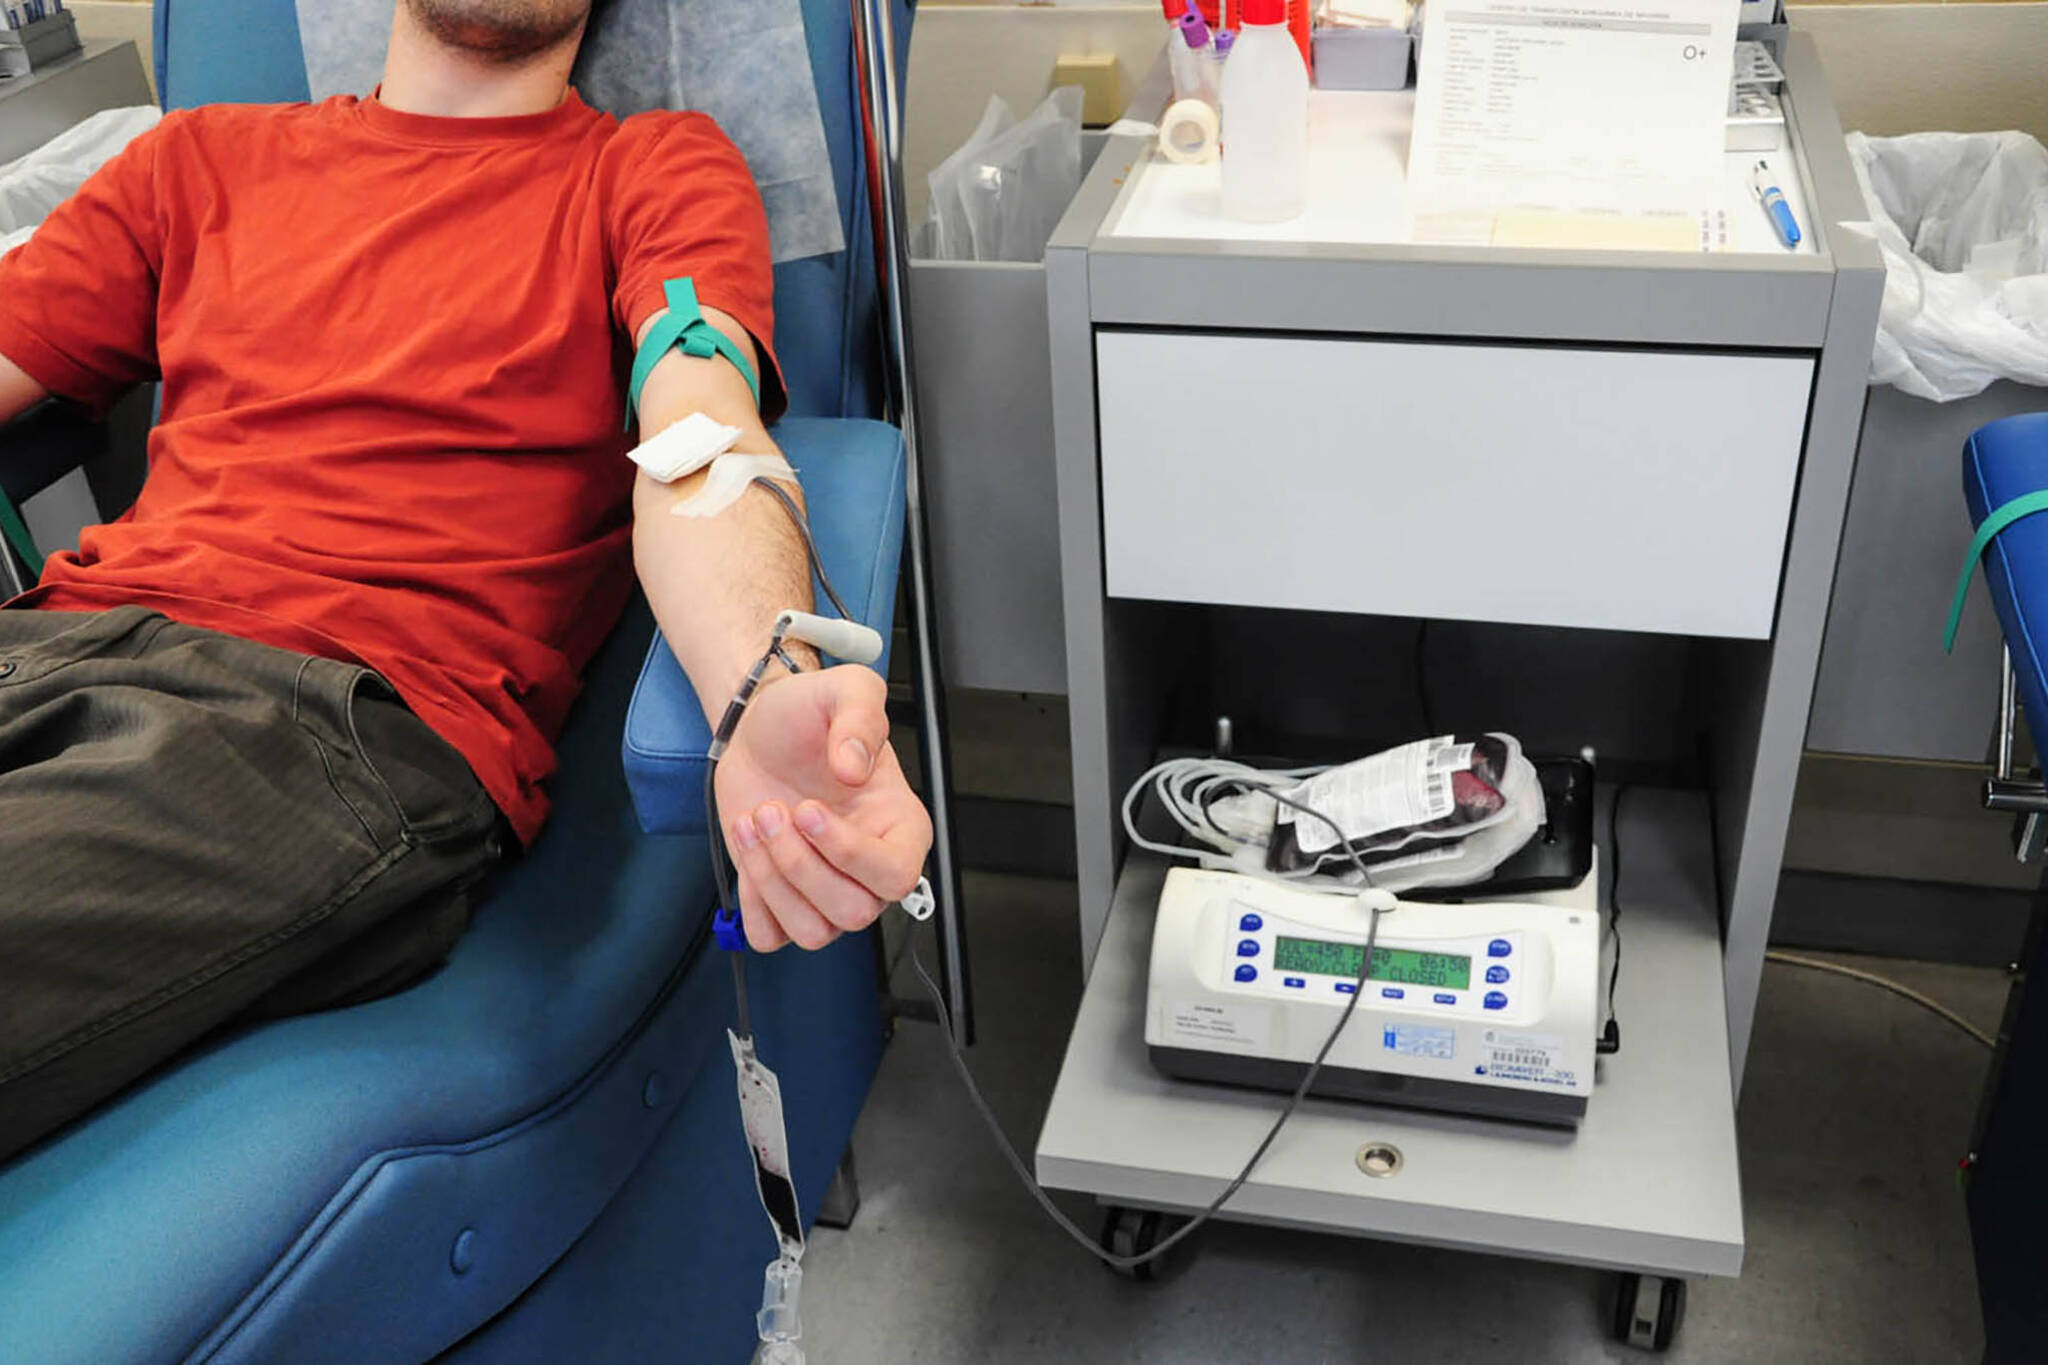 Донор маг. Аппарат для гемотрансфузии. Аппарат для переливания крови. Аппарат для гемотрансфузии крови. Аппарат для взятия крови донорской.